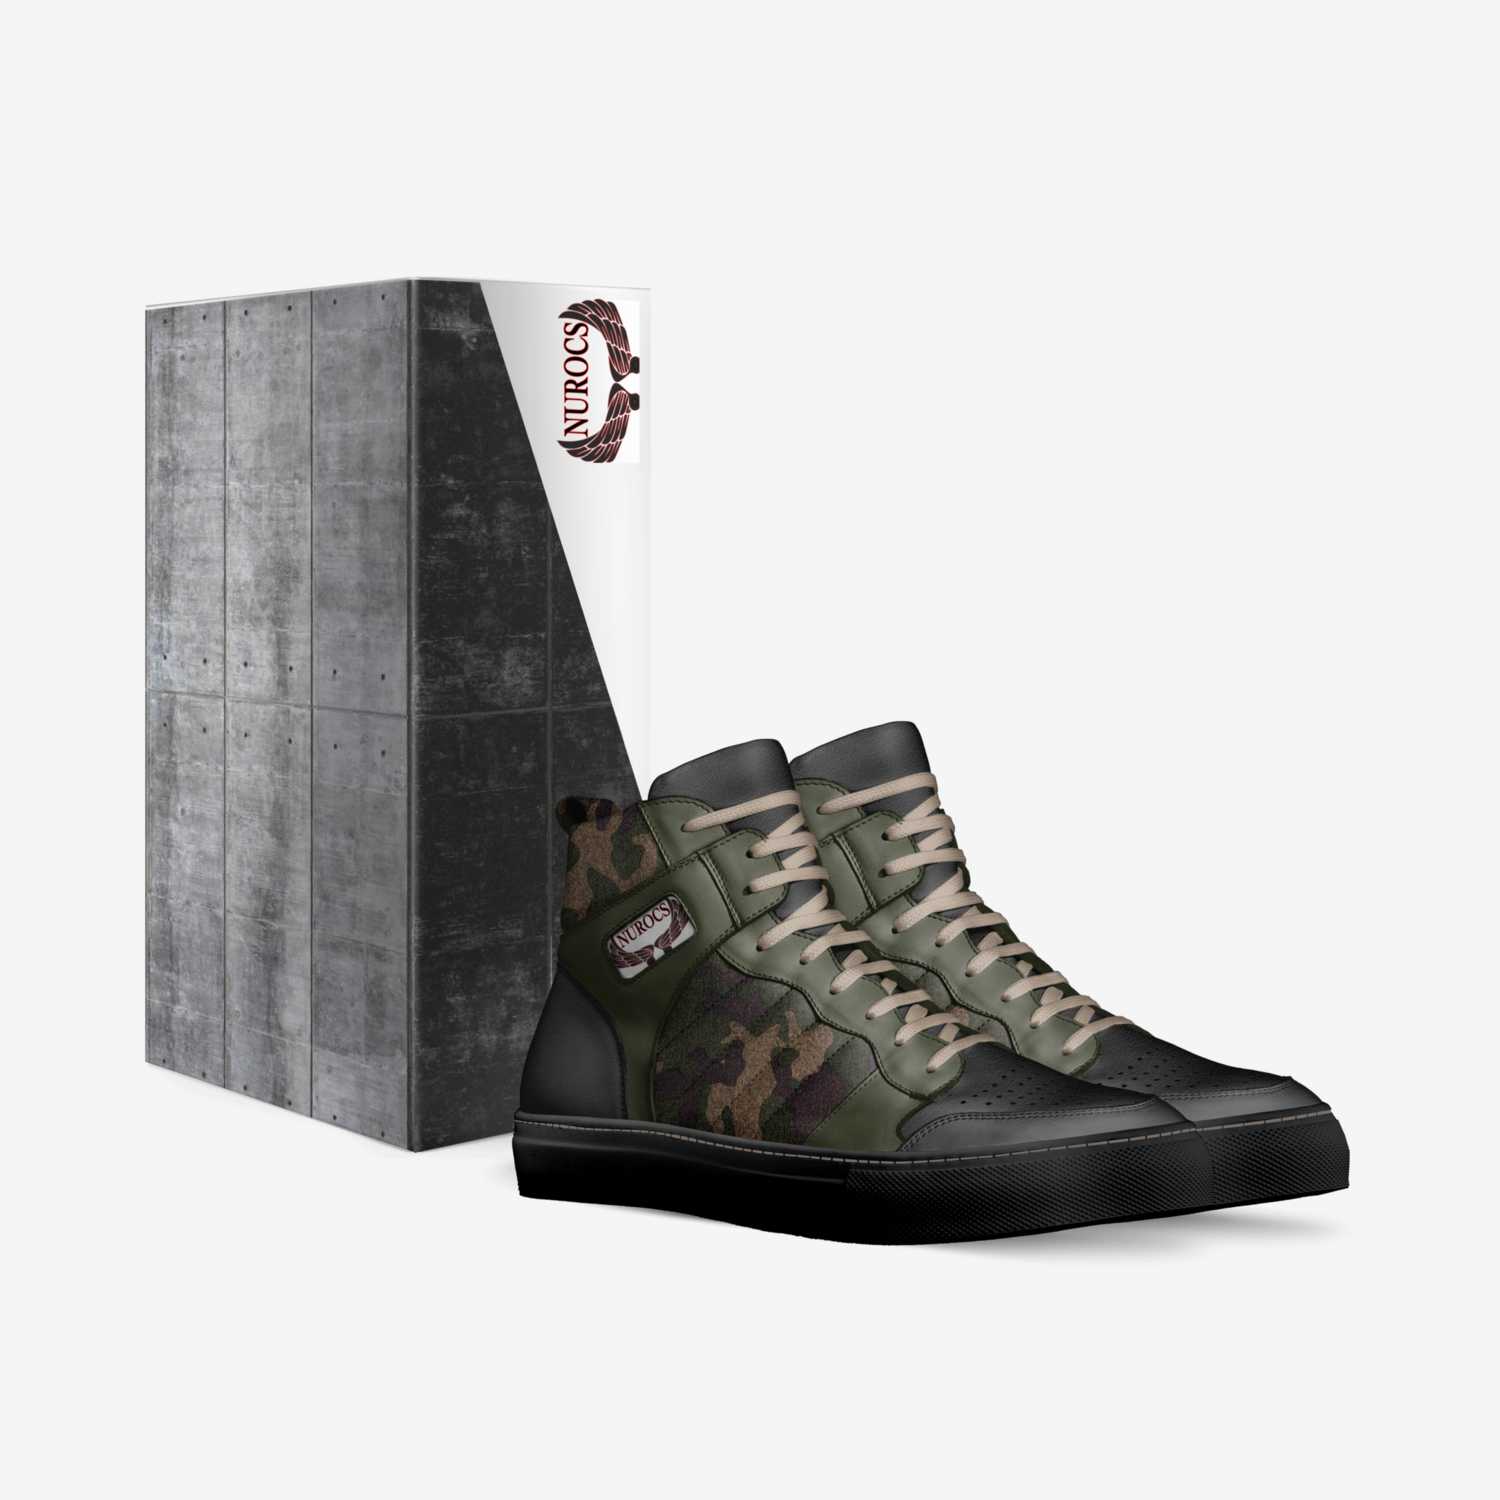 NUROCS custom made in Italy shoes by Nicholas Stumpf | Box view